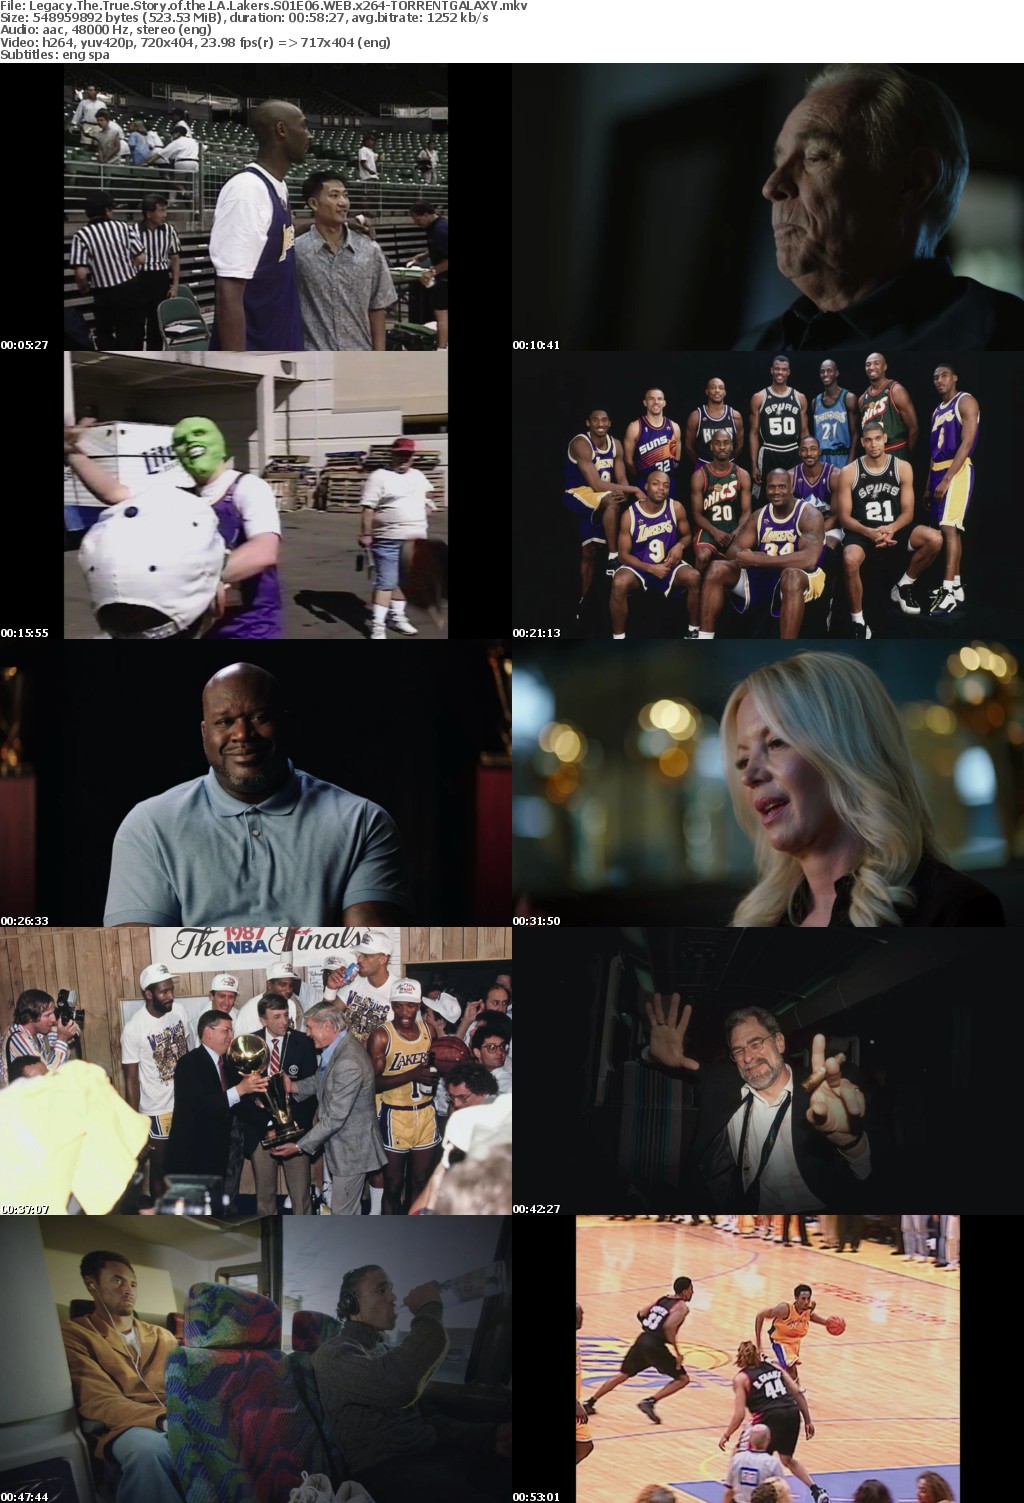 Legacy The True Story of the LA Lakers S01E06 WEB x264-GALAXY